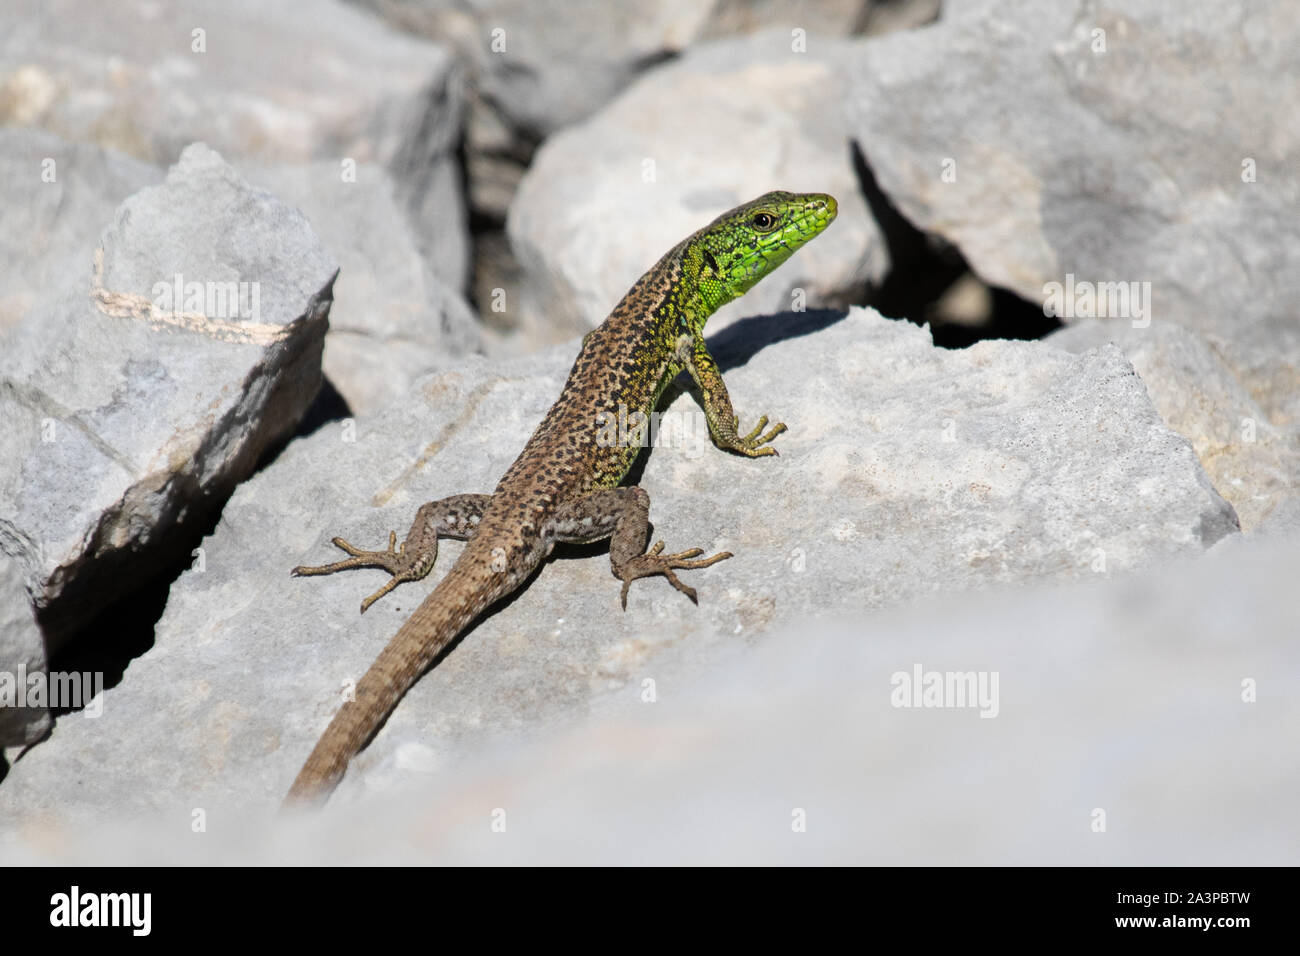 West Iberian Rock Lizard (Iberolacerta monticola) Foto Stock